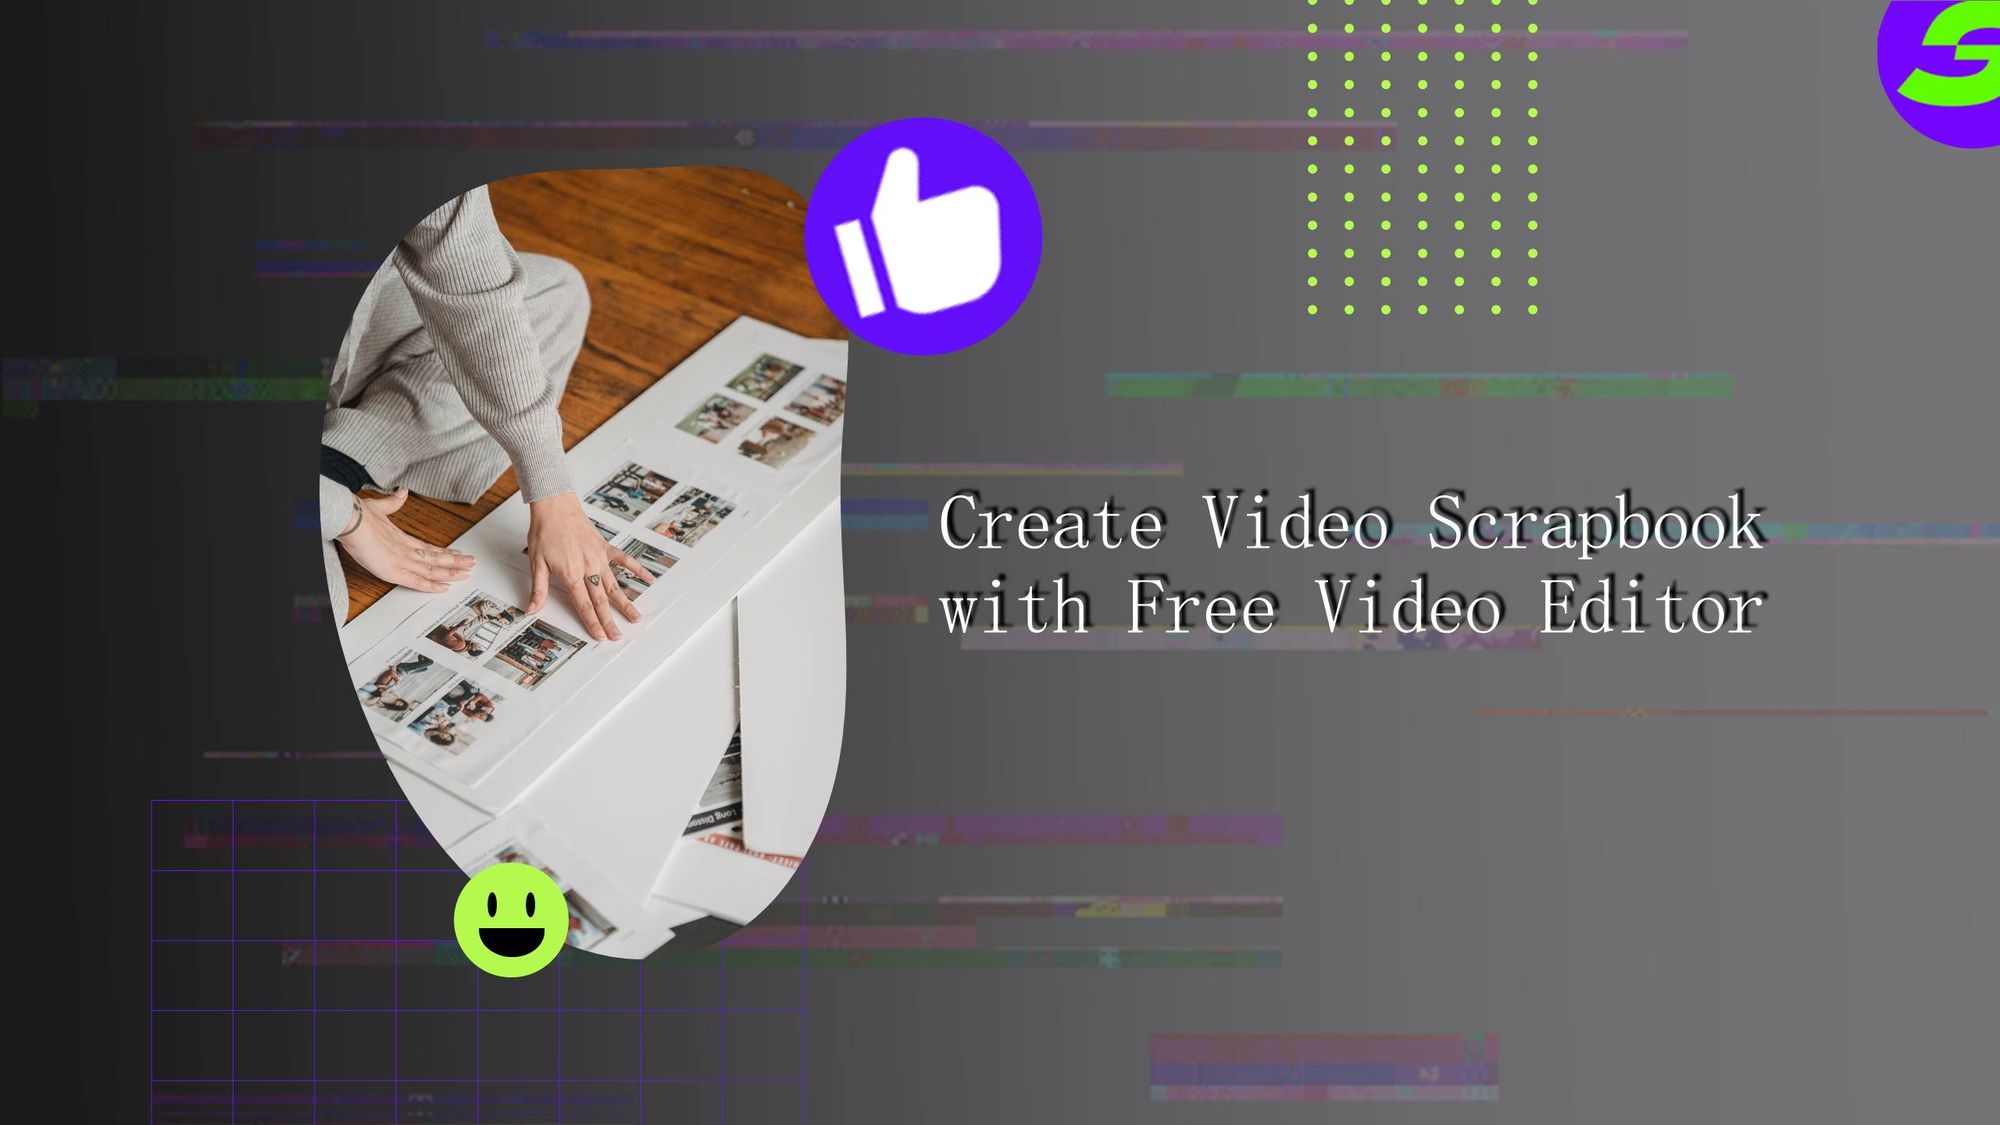 Edit Video Scrapbook with Free Video editing app